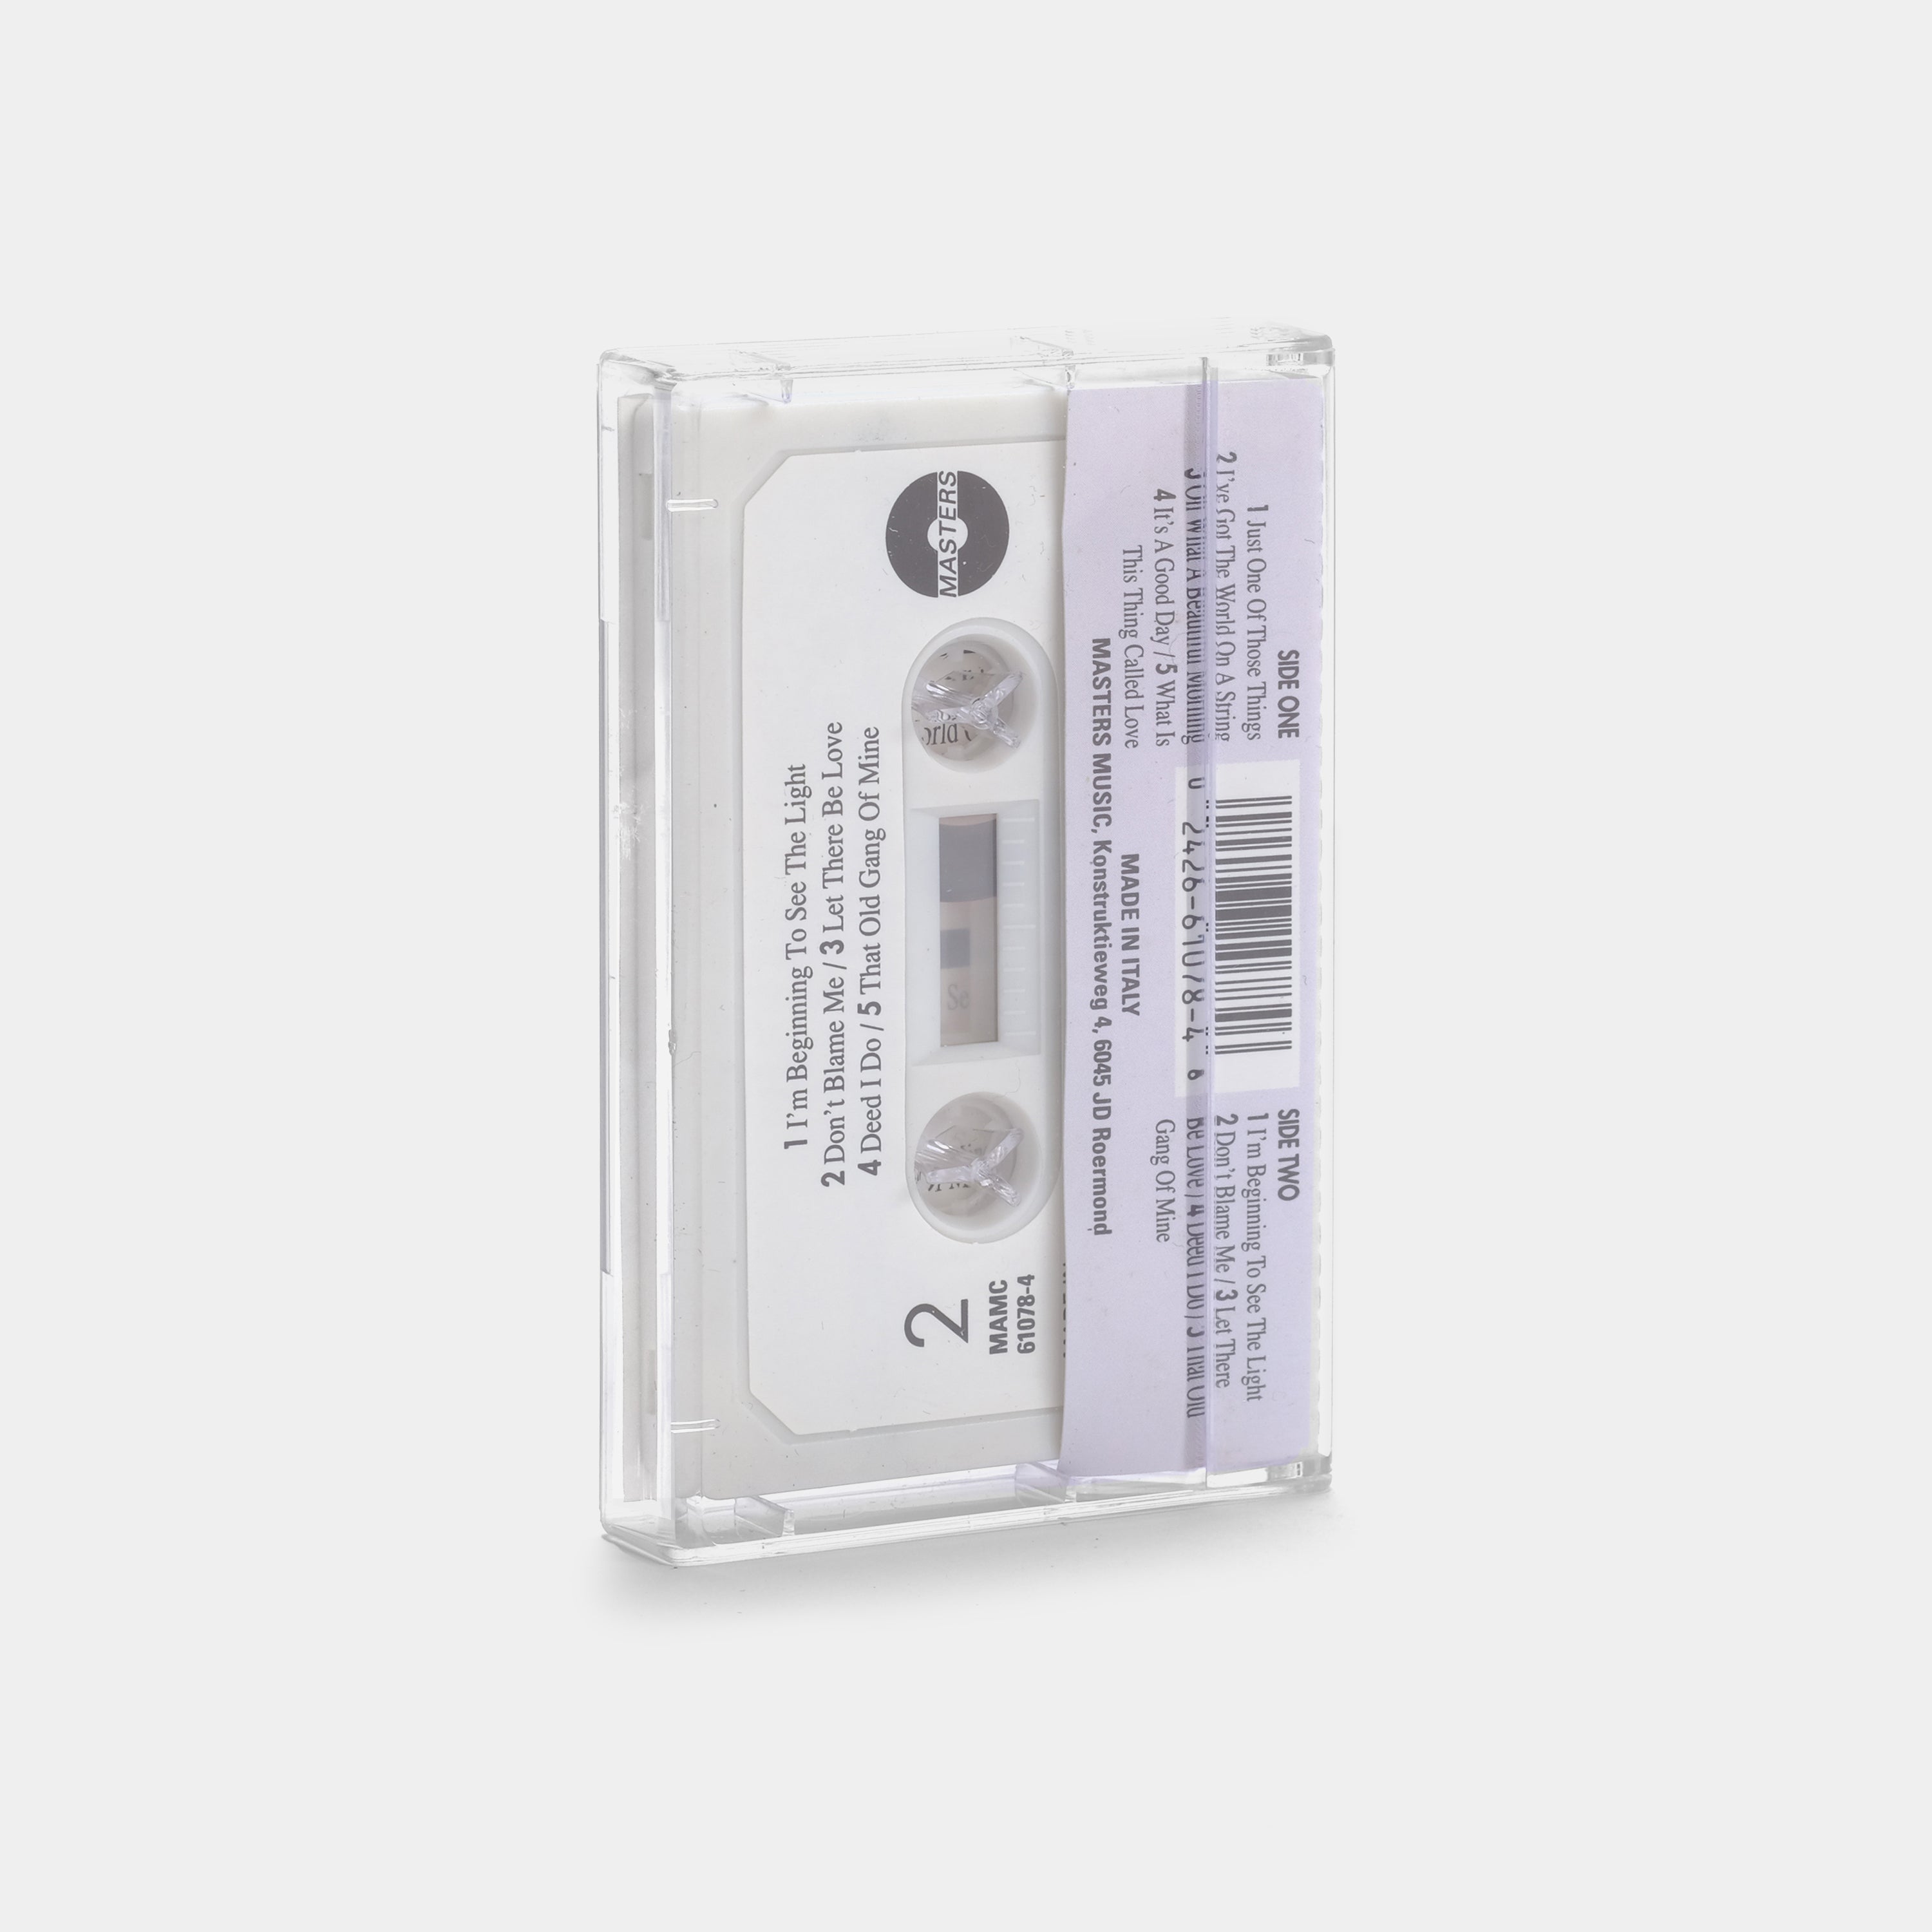 Peggy Lee - Golden Hits Cassette Tape